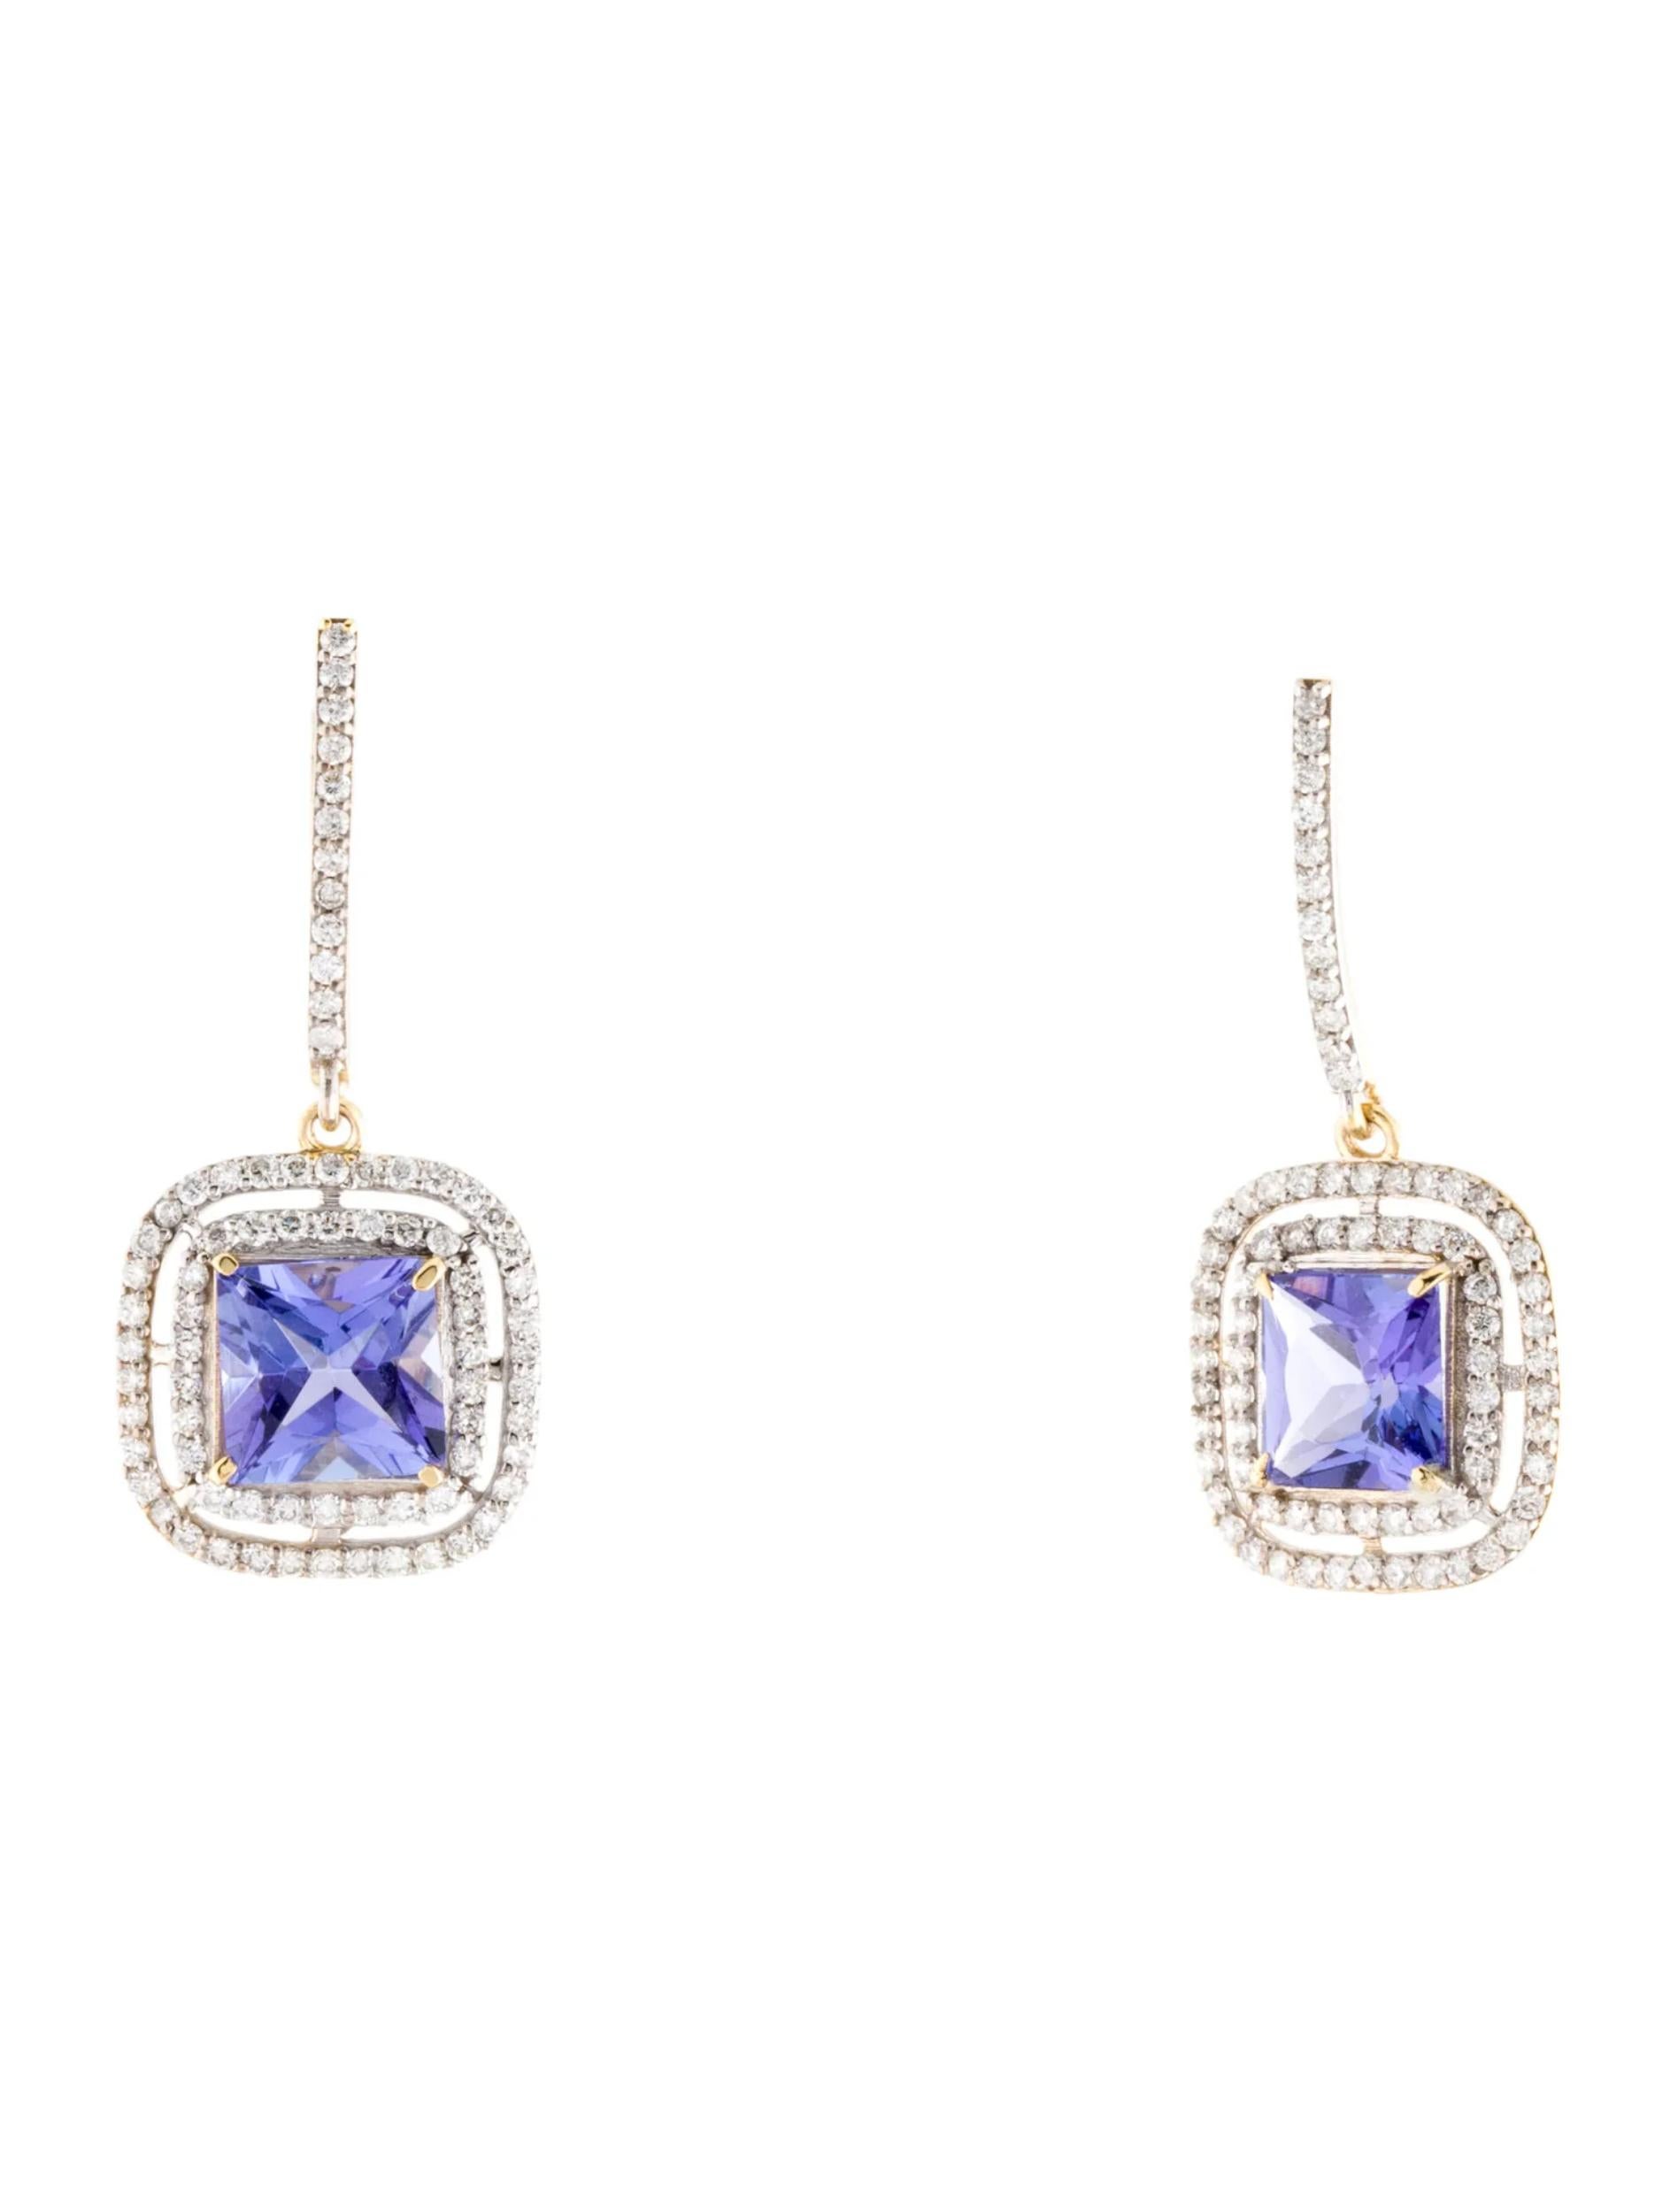 Square Cut 14K Tanzanite & Diamond Drop Earrings - Exquisite Sparkle, Timeless Elegance For Sale